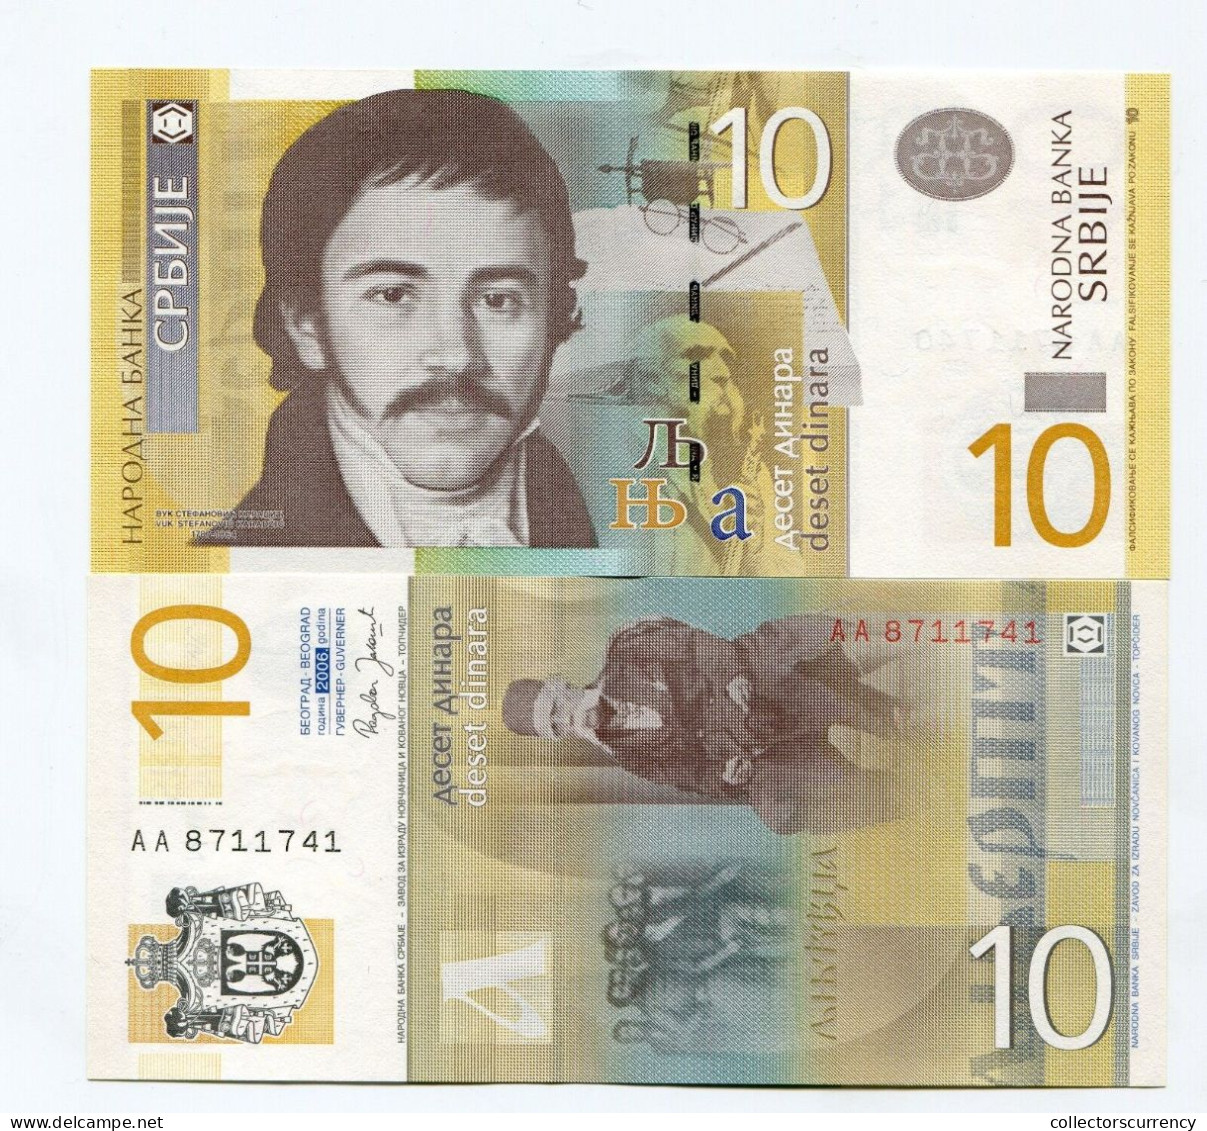 Serbia 10 Dinara 2006 P46 Banknote Paper Money UNC X 10 Piece Lot - Serbie